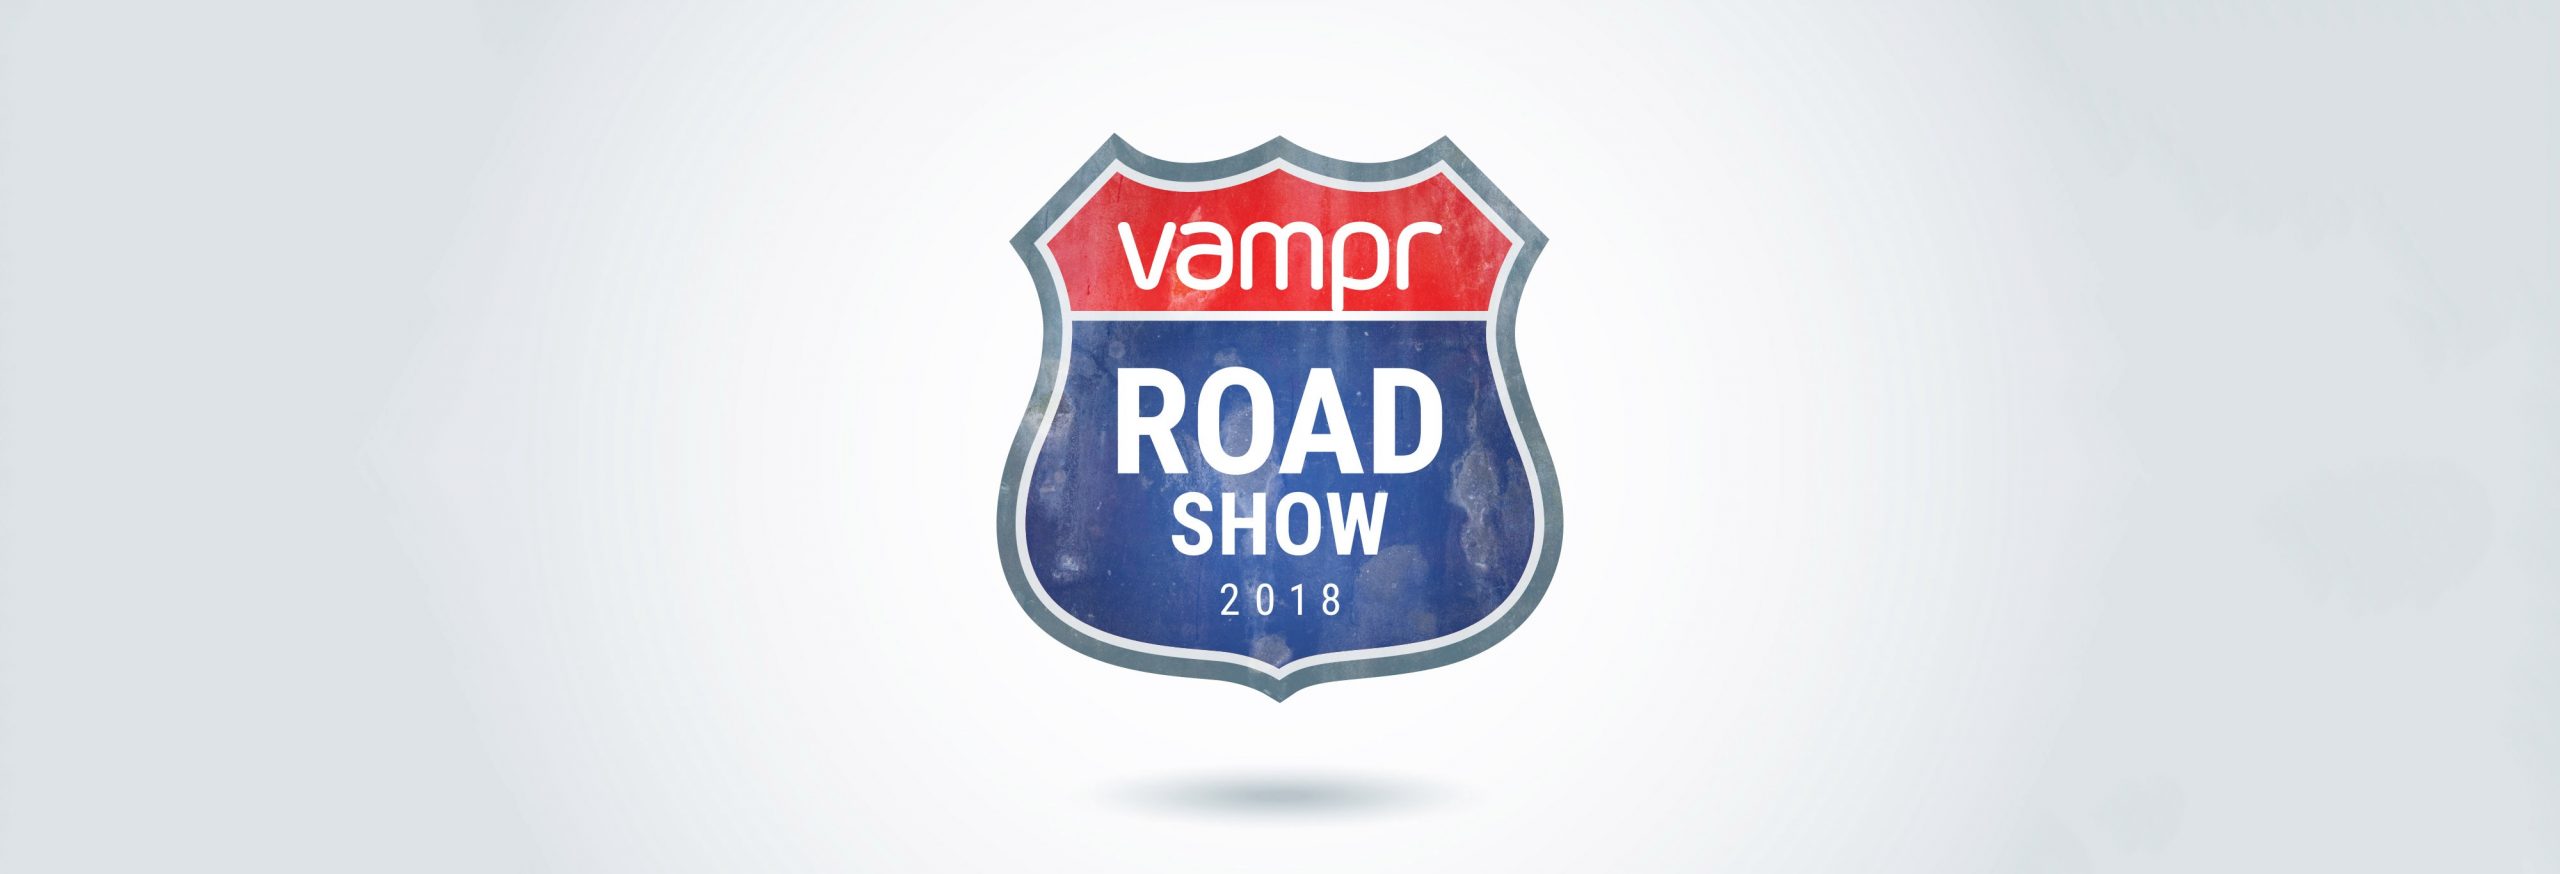 Vampr Roadshow 2018